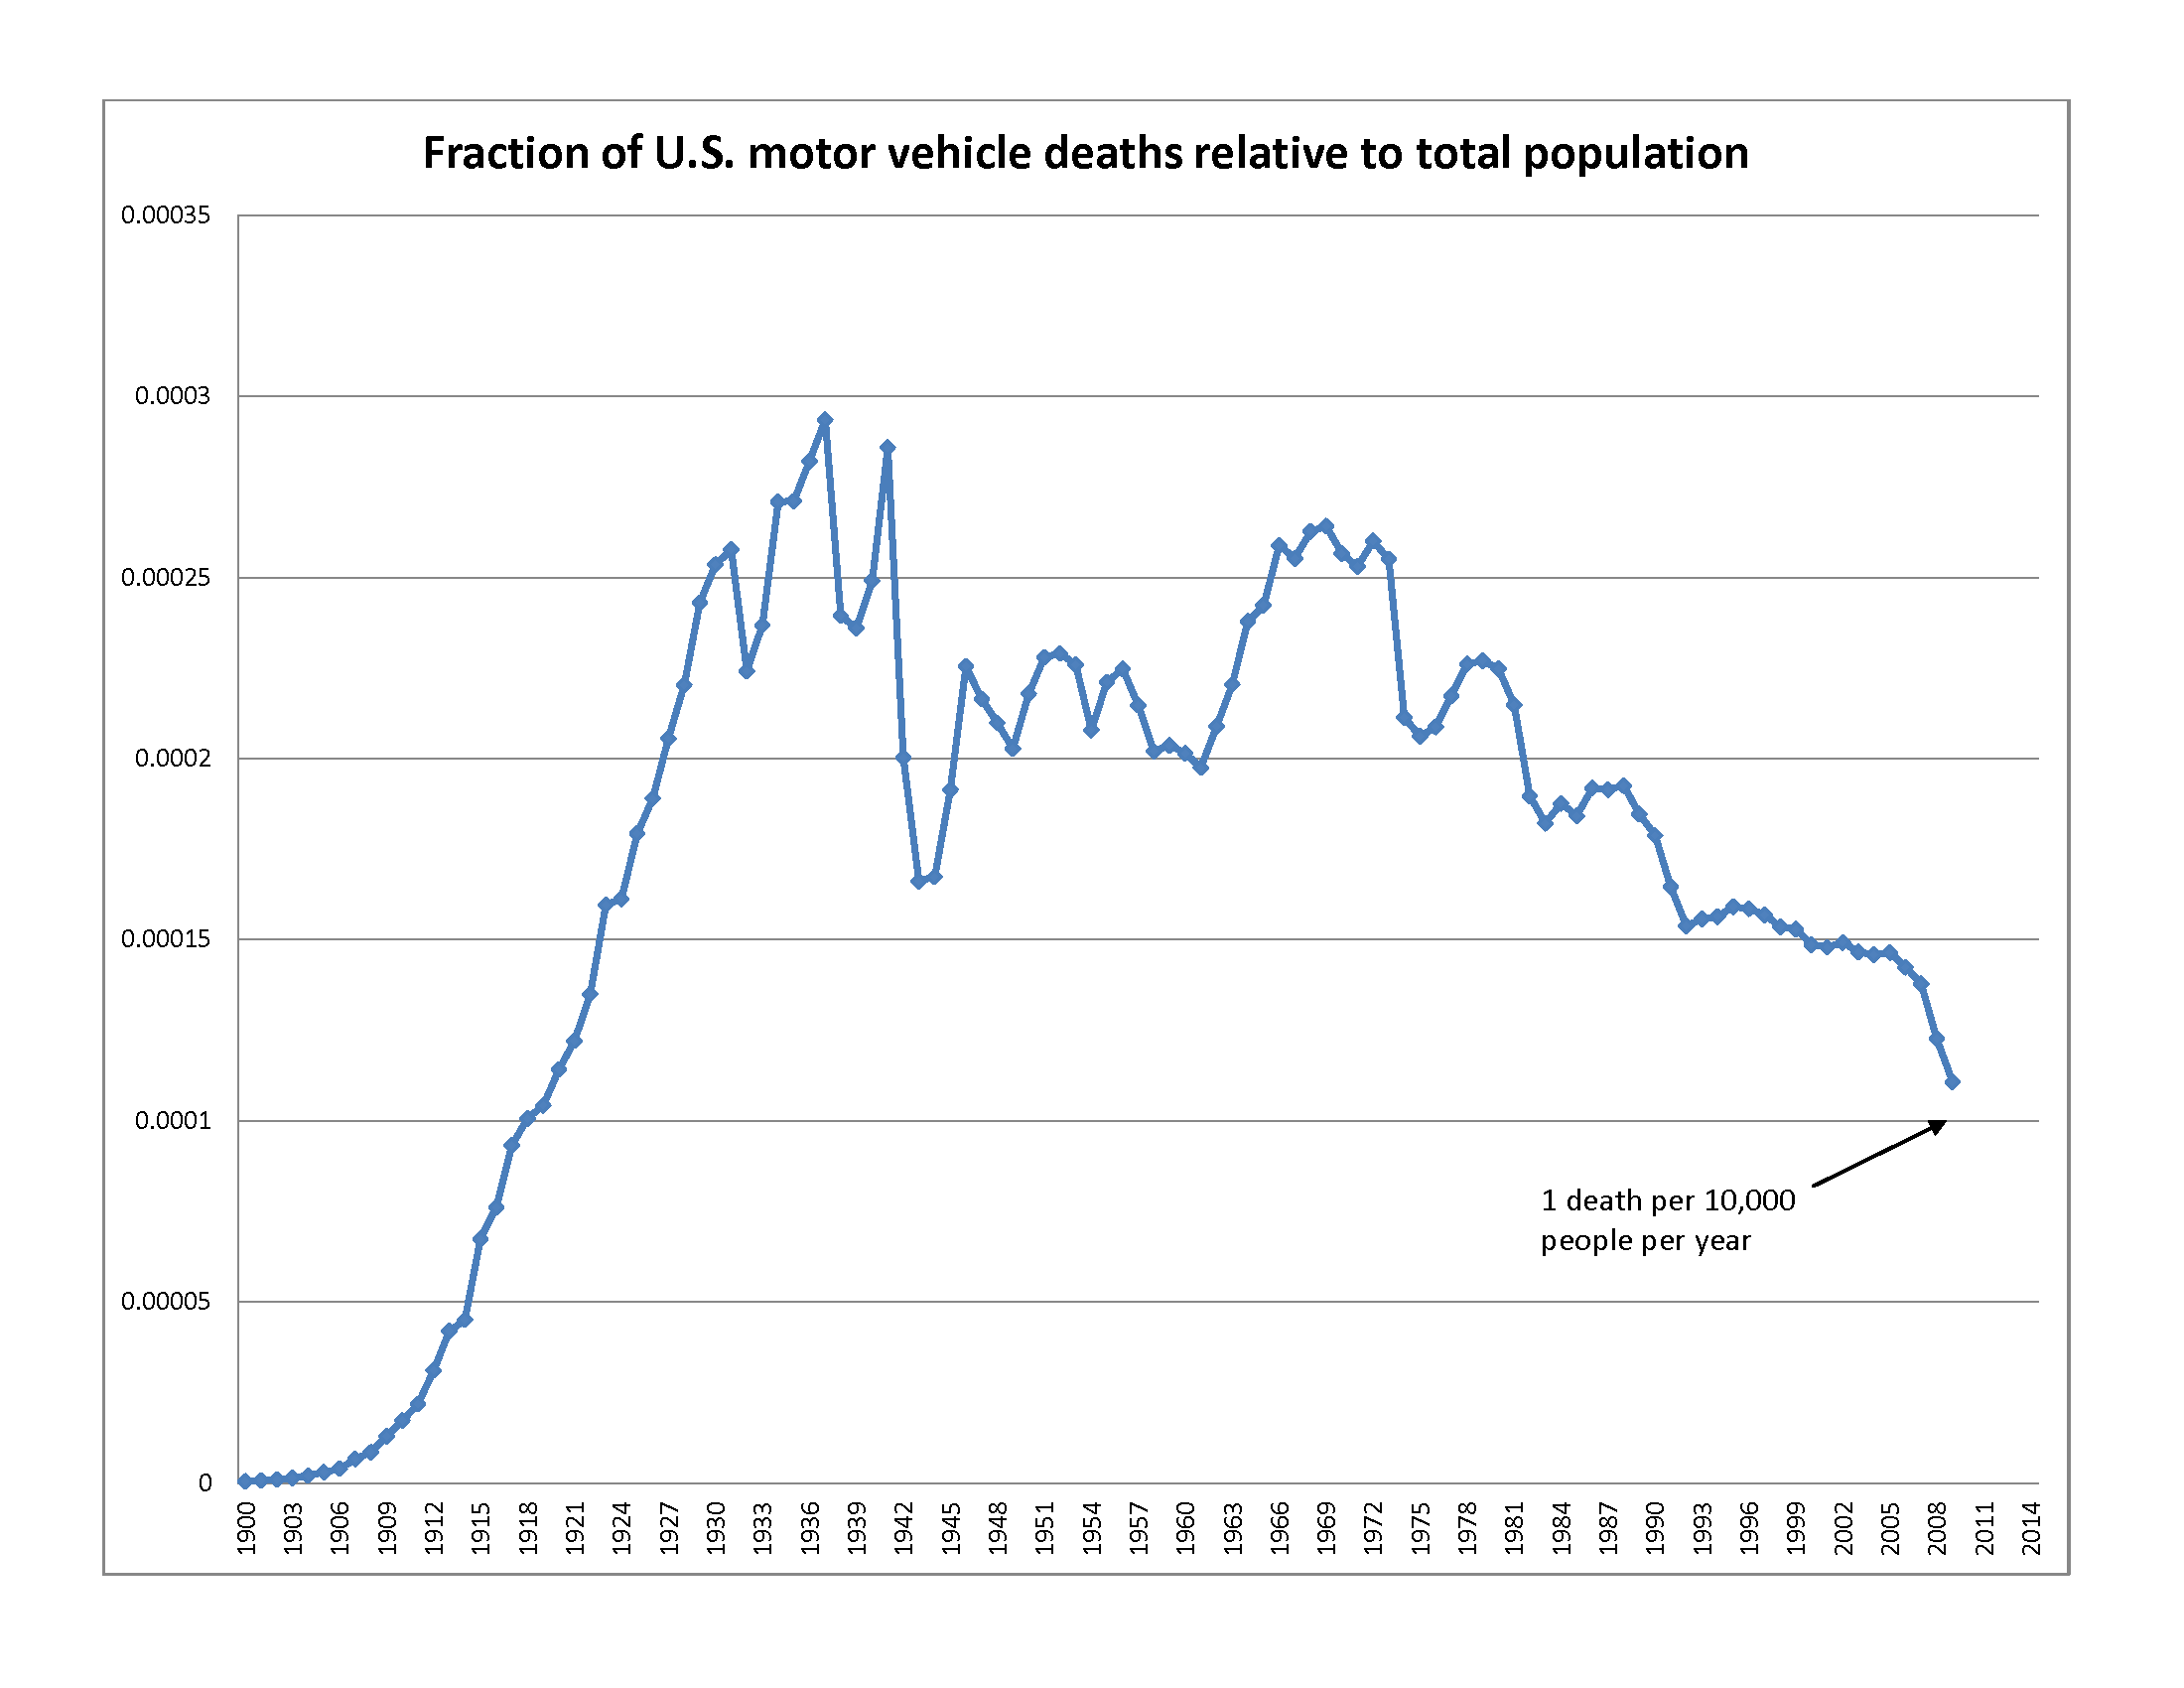 U.S._traffic_deaths_as_fraction_of_total_population_1900-2010.png